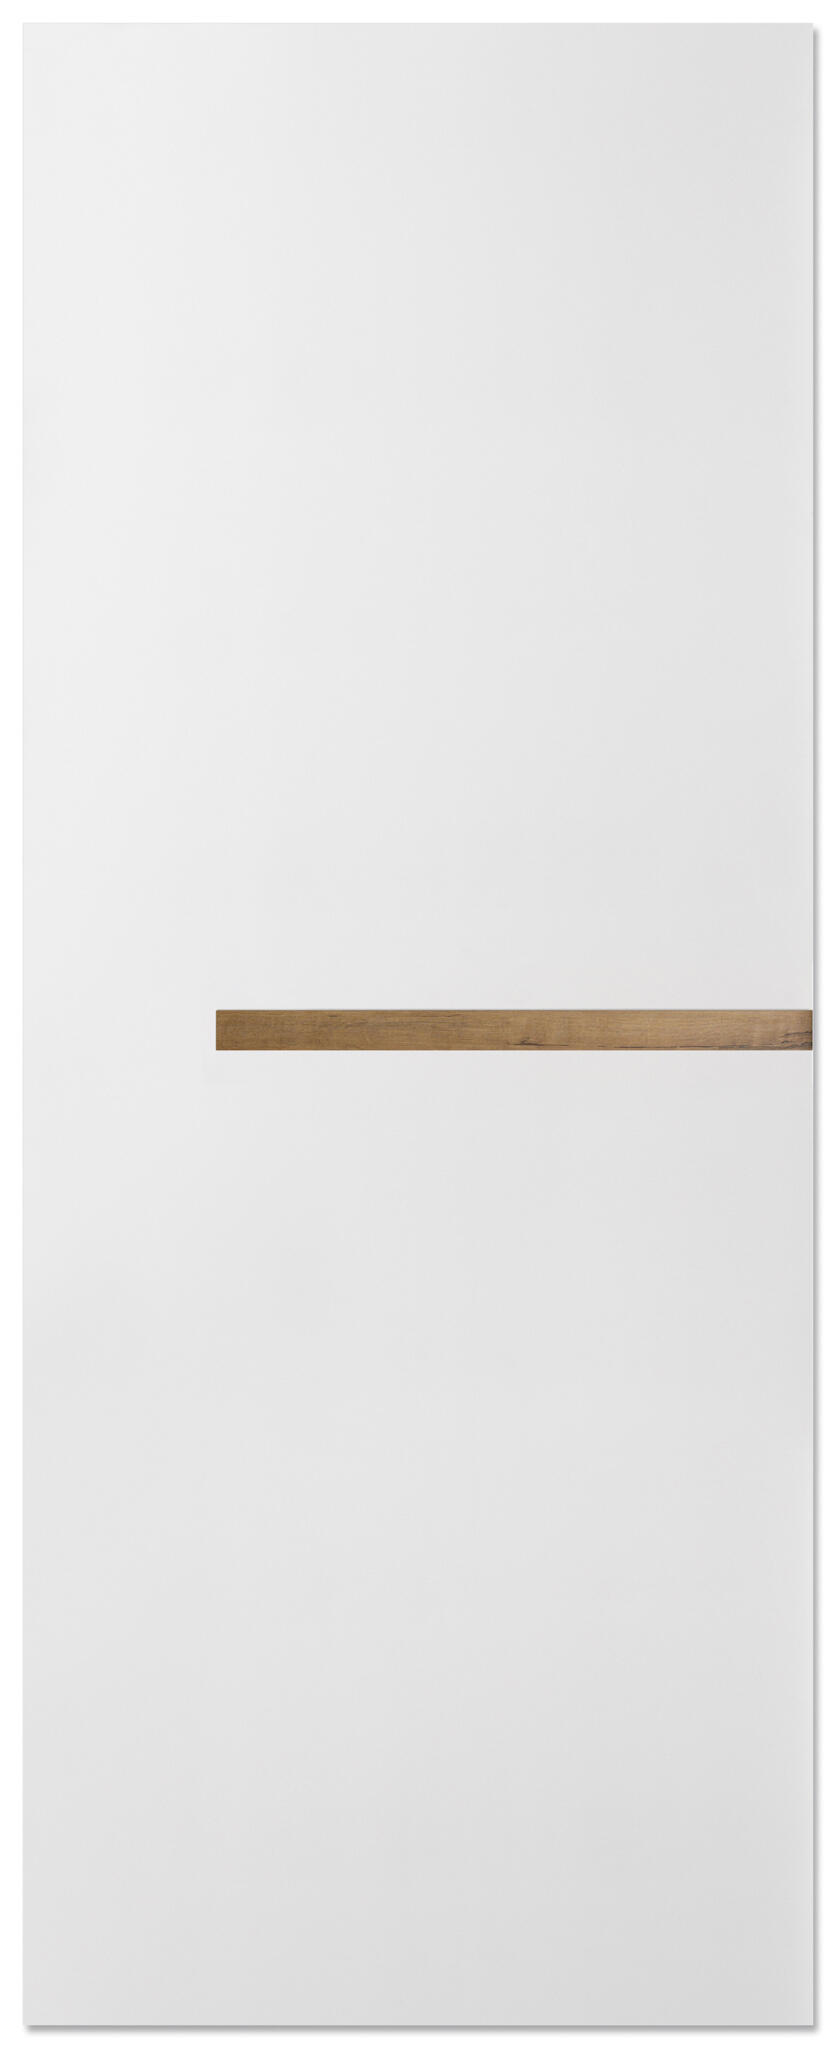 Panel de puerta blindada denver gold de 84x205 cm de la marca Sin marca